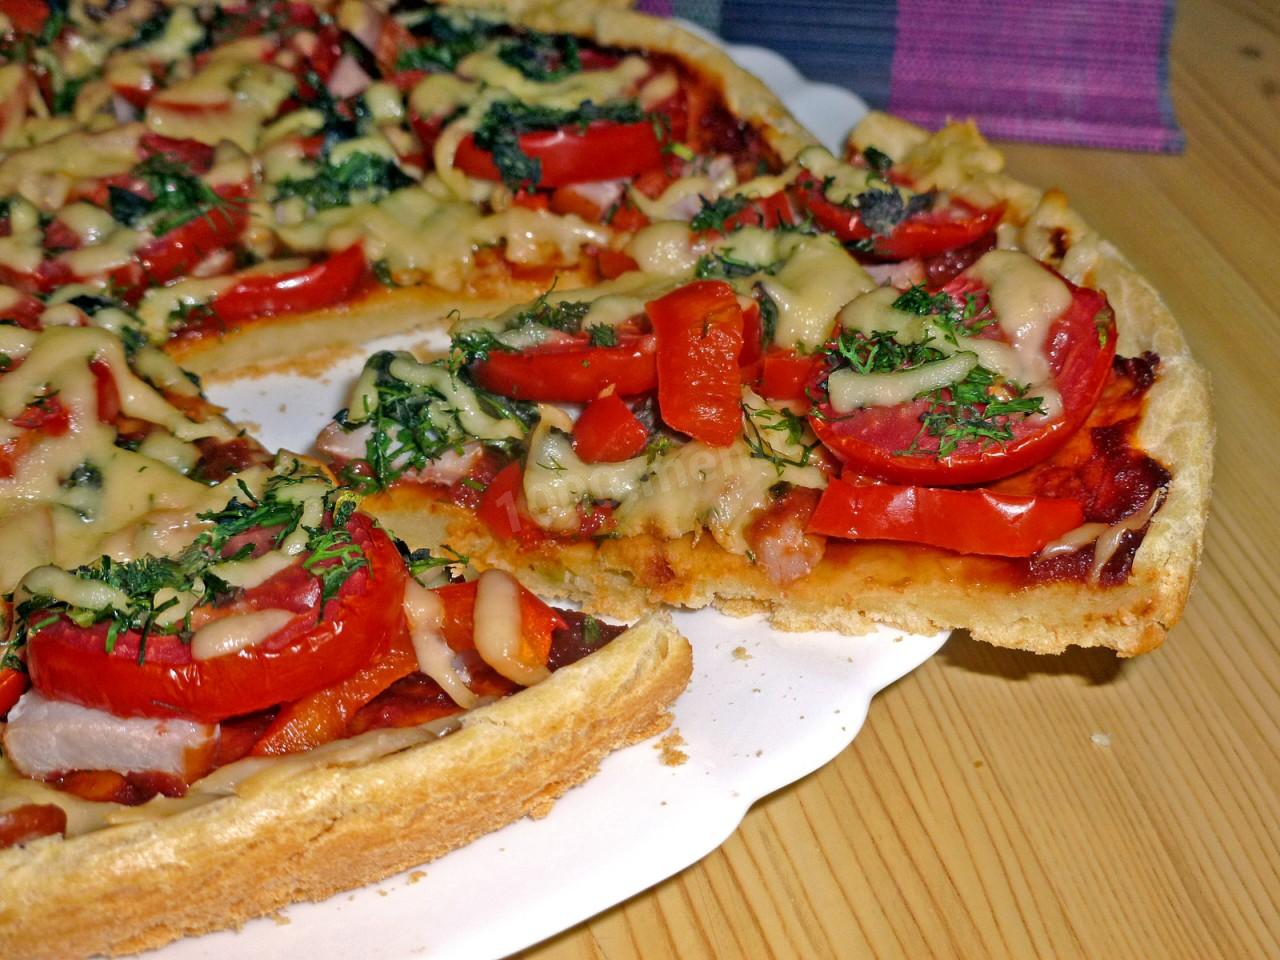 Пицца на жидком тесте на кефире в духовке рецепт с фото пошагово